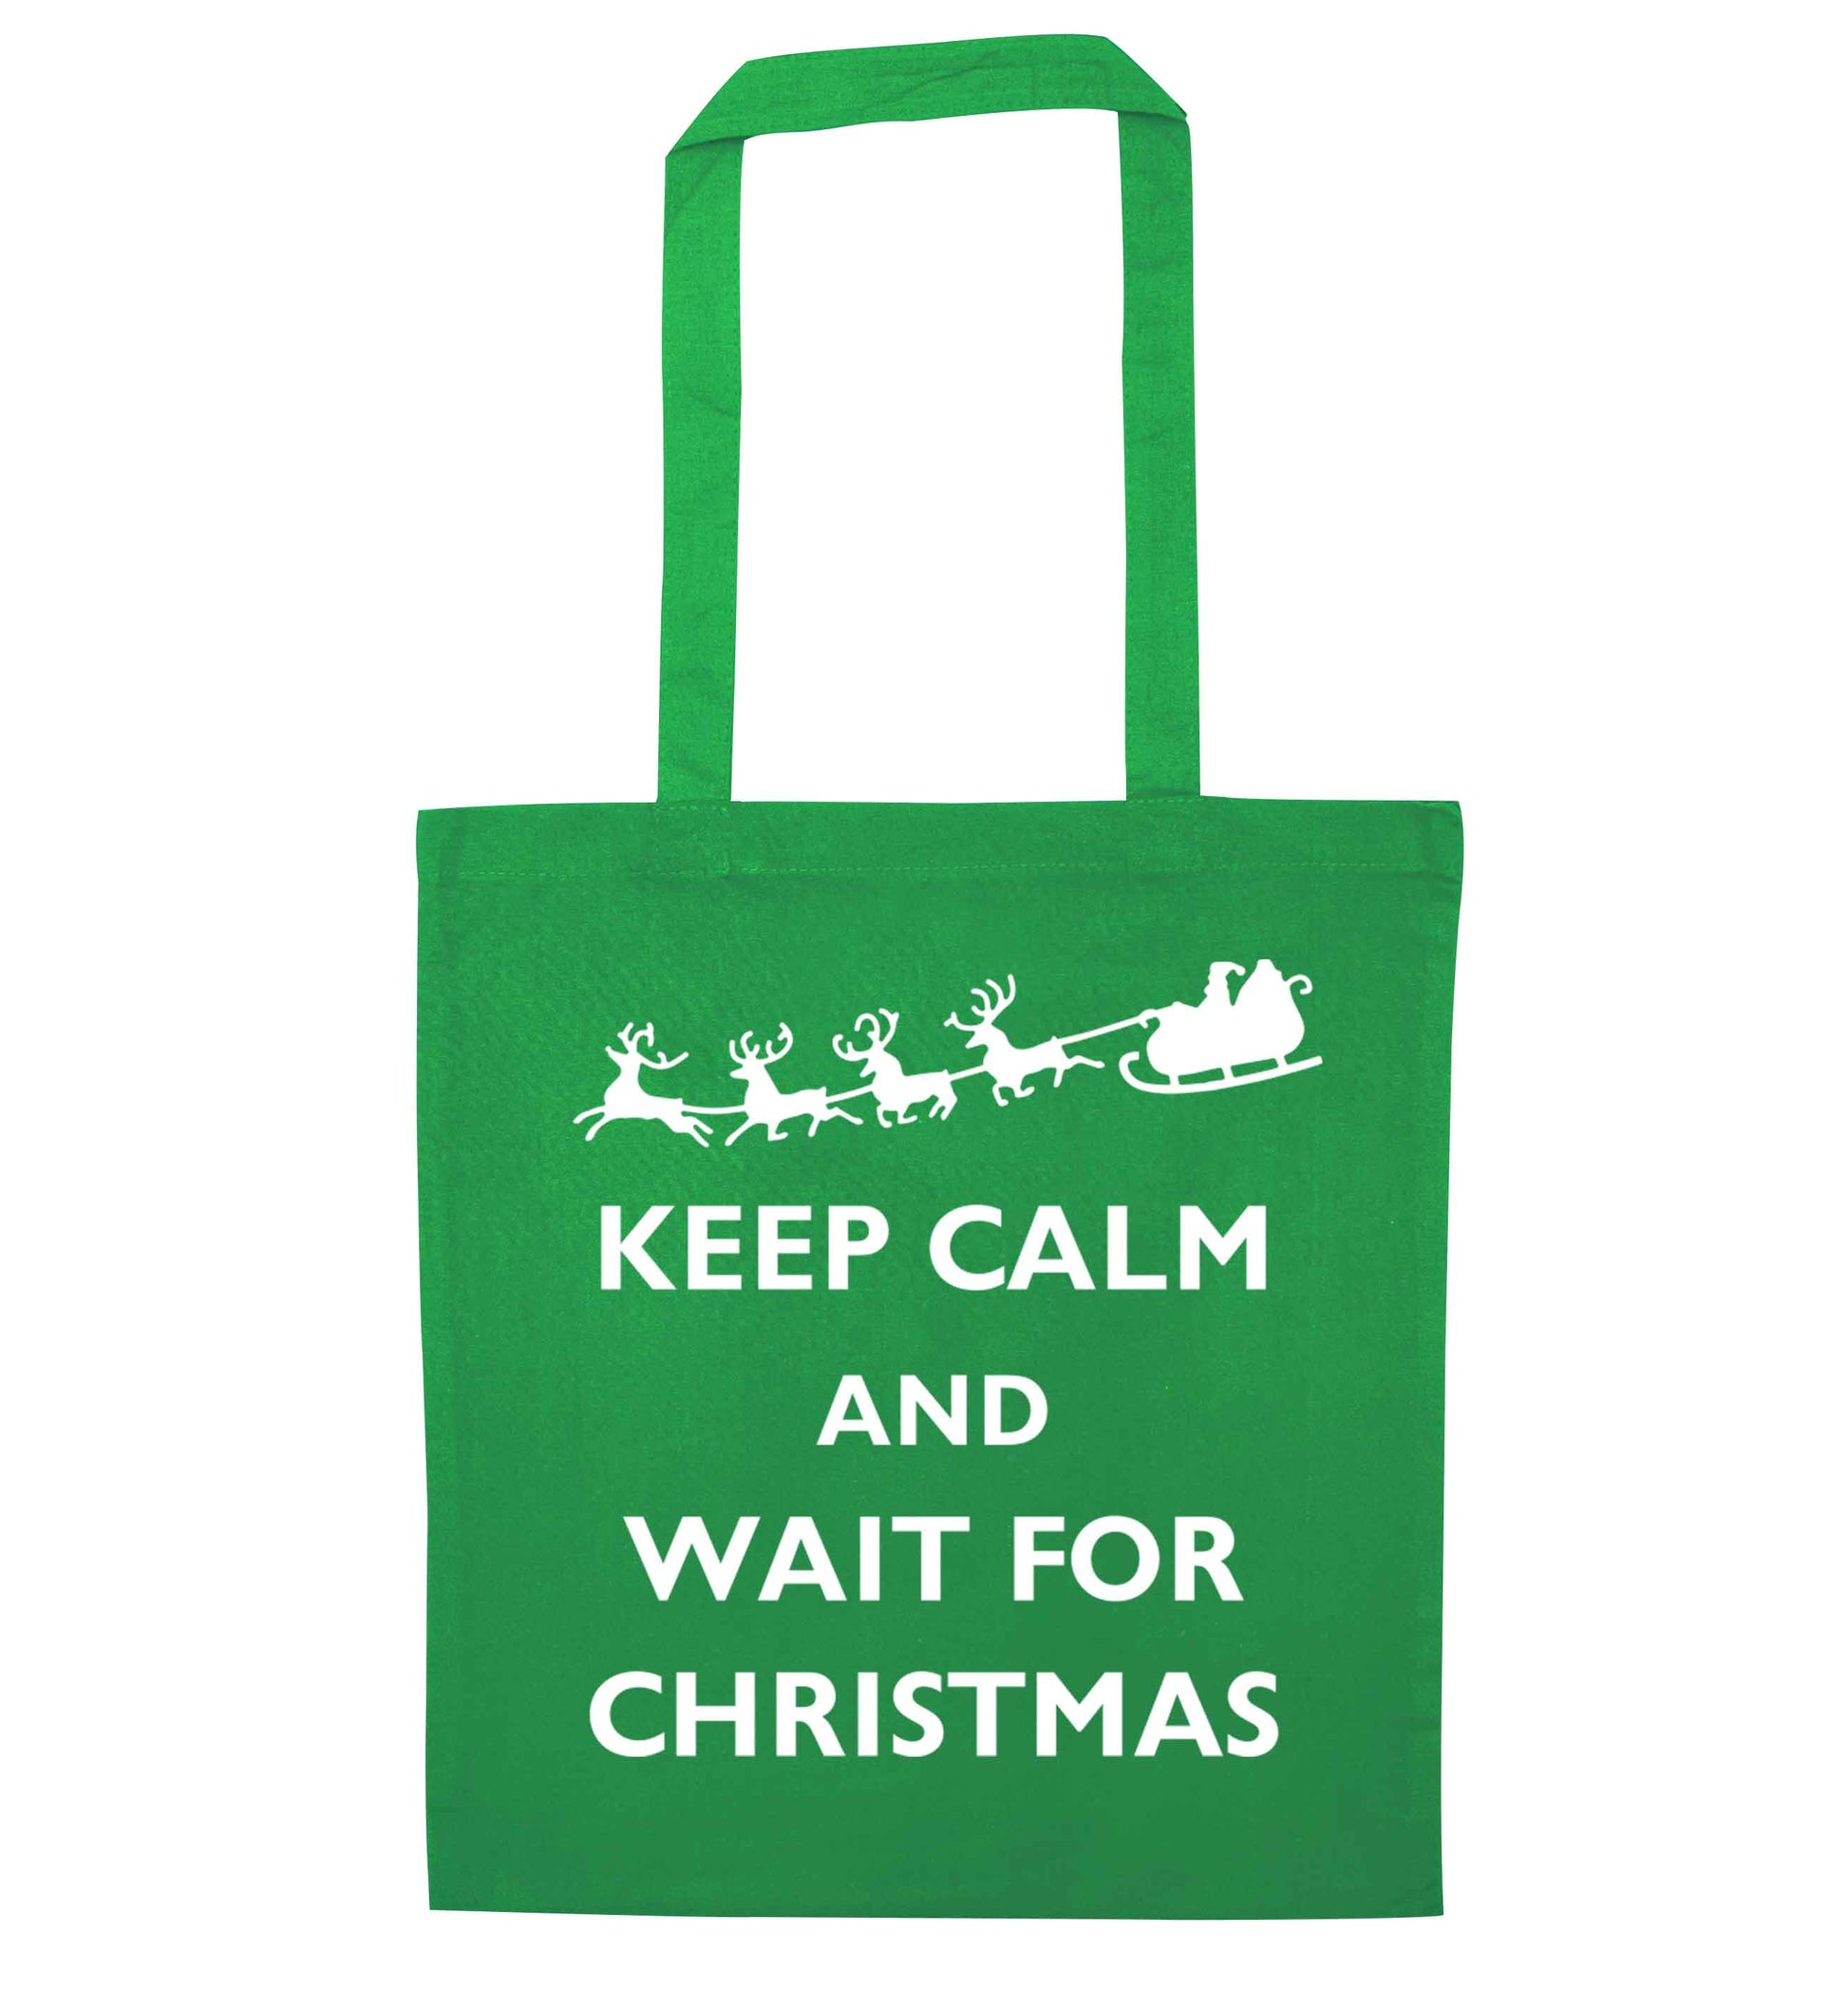 Keep calm and wait for Christmas green tote bag